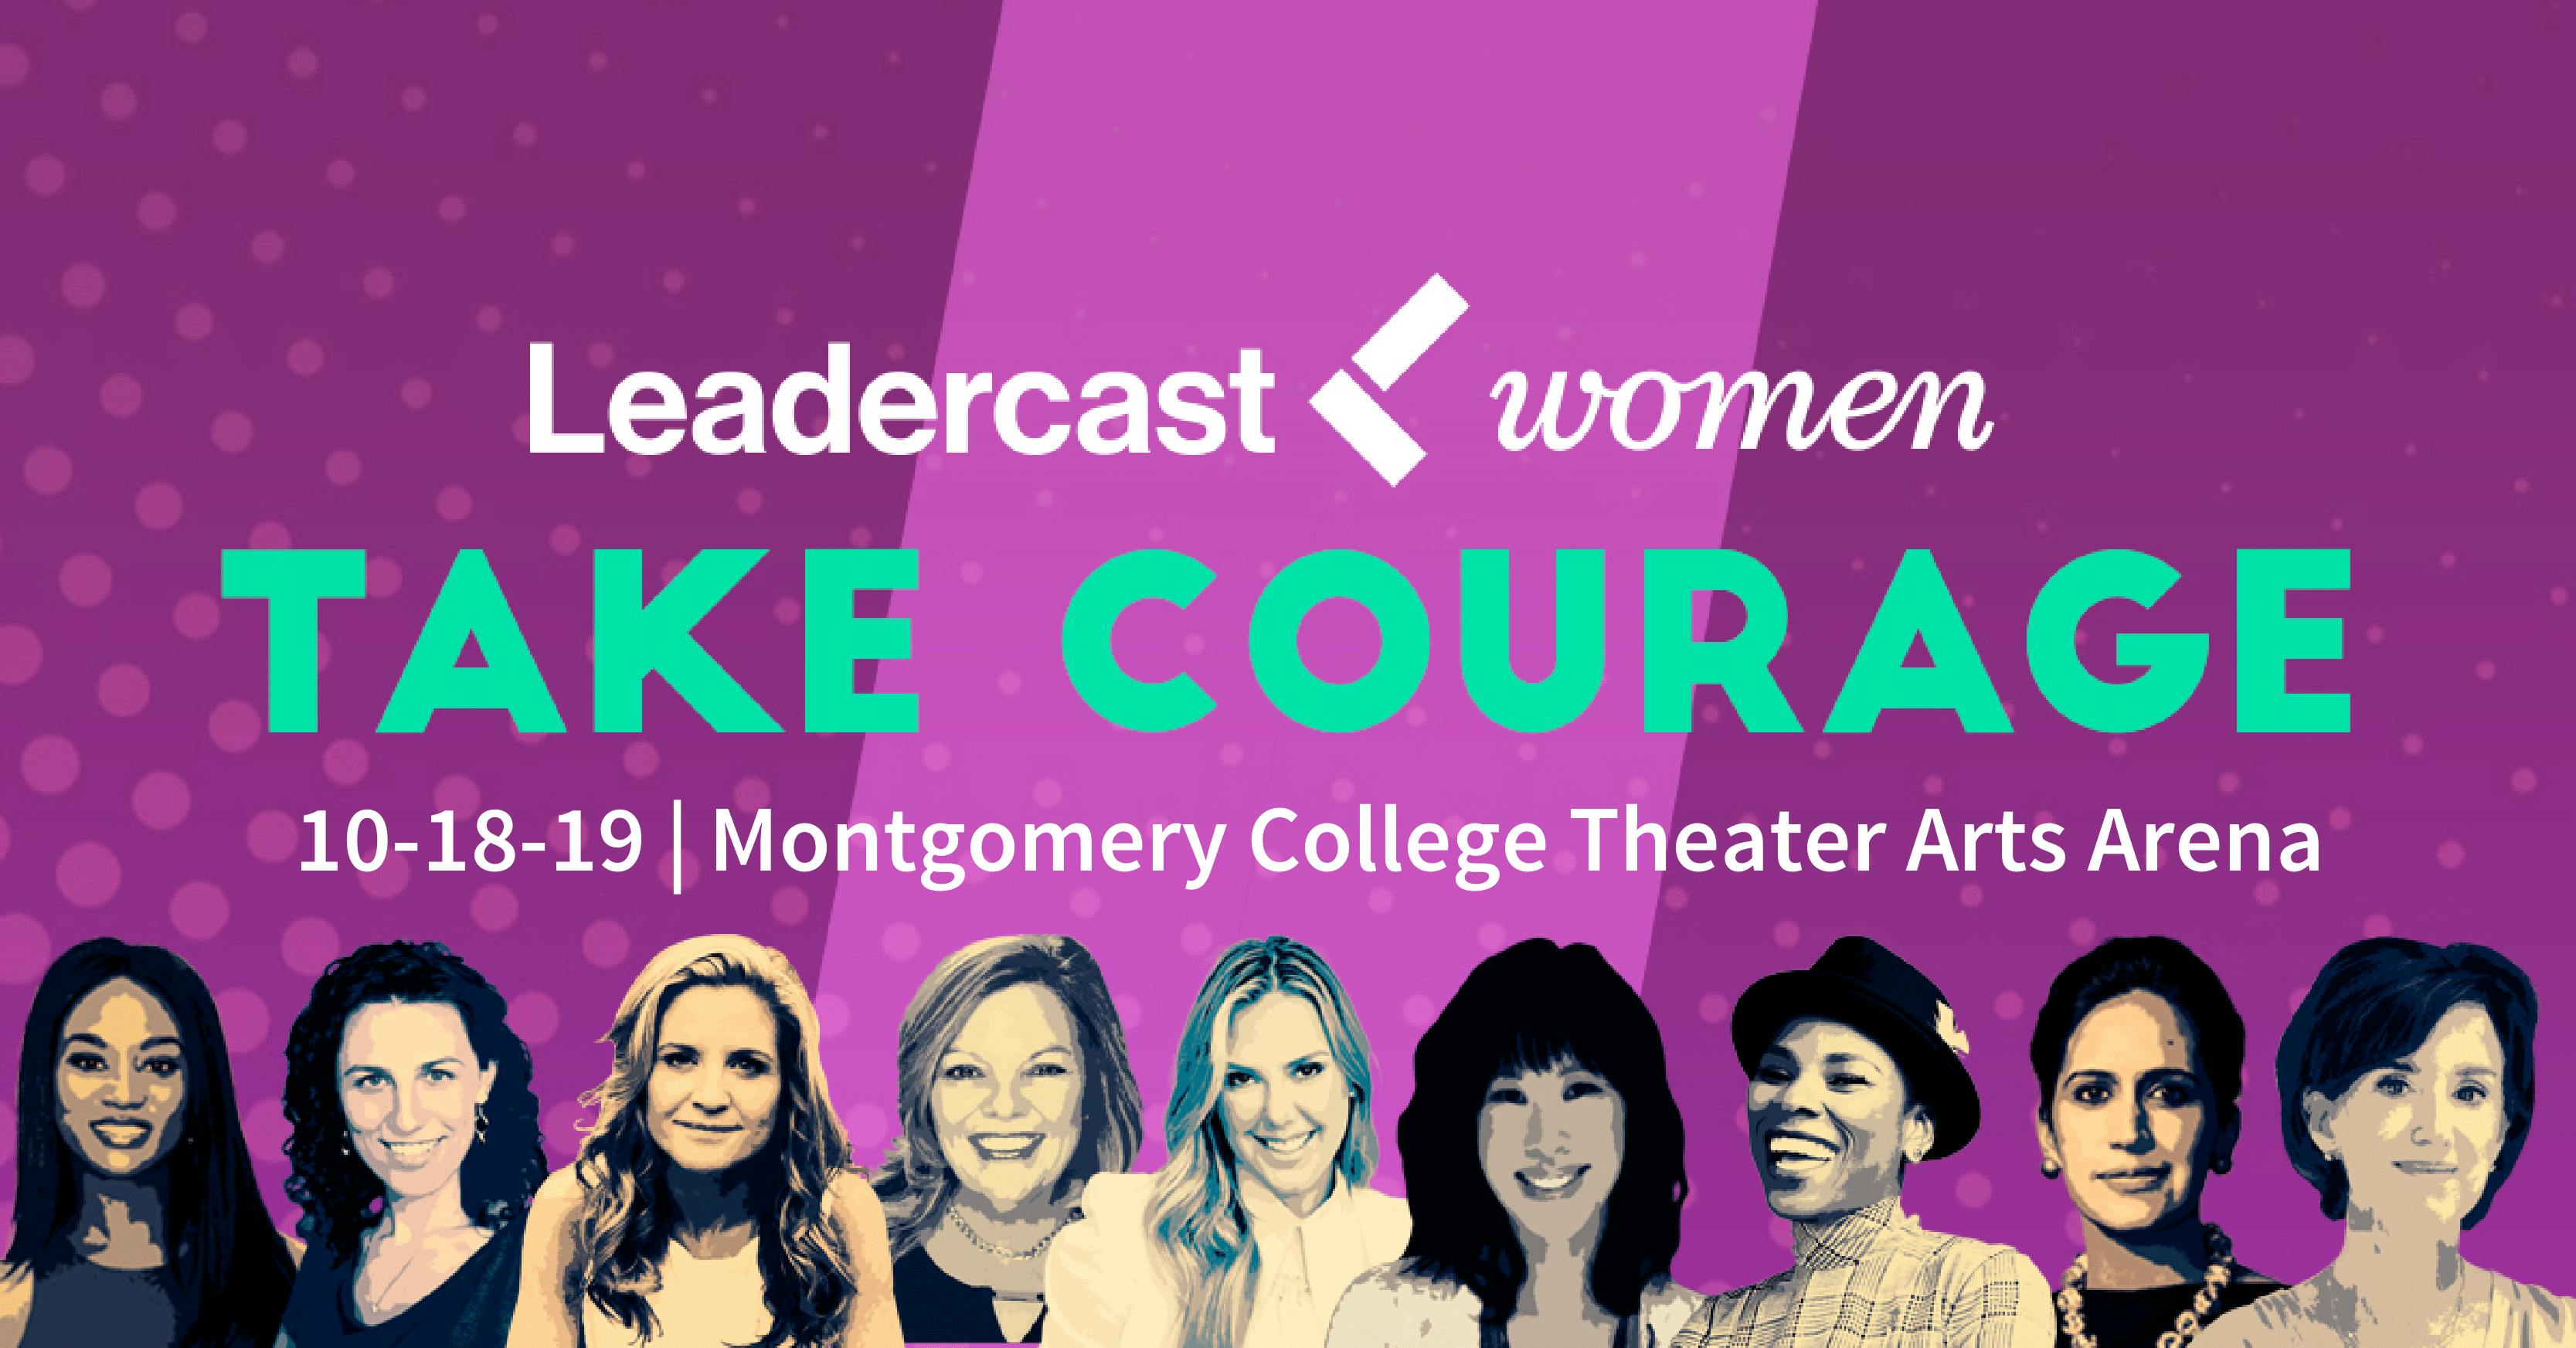 Leadercast Women - Take Courage